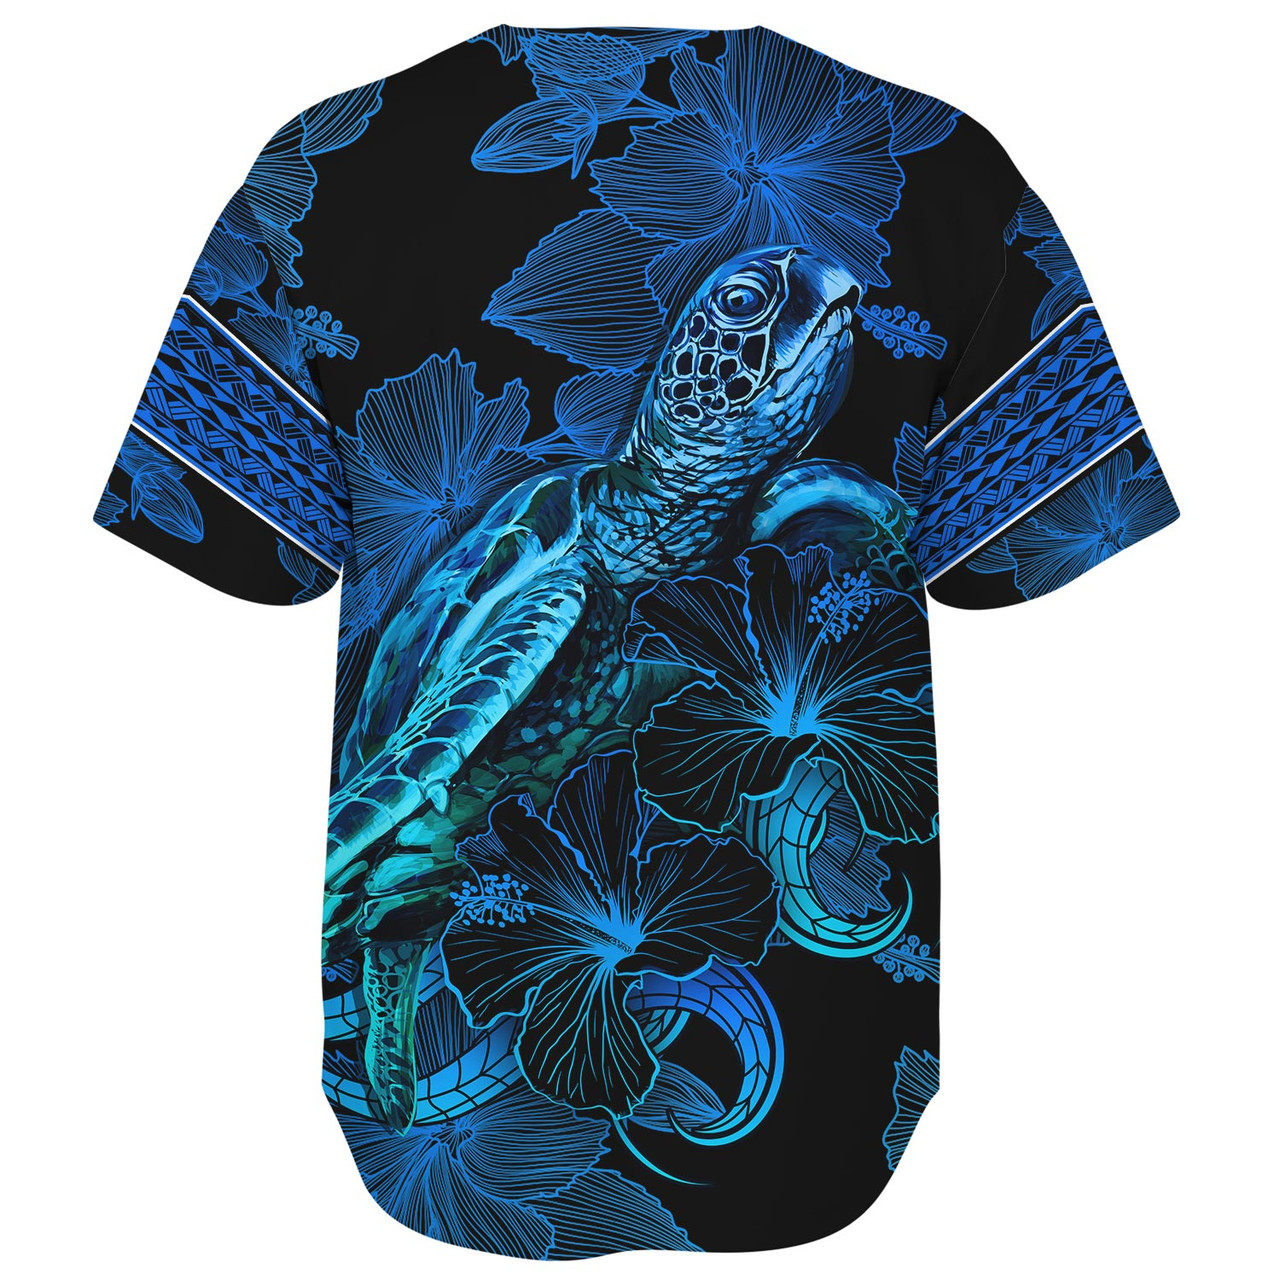 Papua New Guinea Baseball Shirt Sea Turtle With Blooming Hibiscus Flowers Tribal Blue